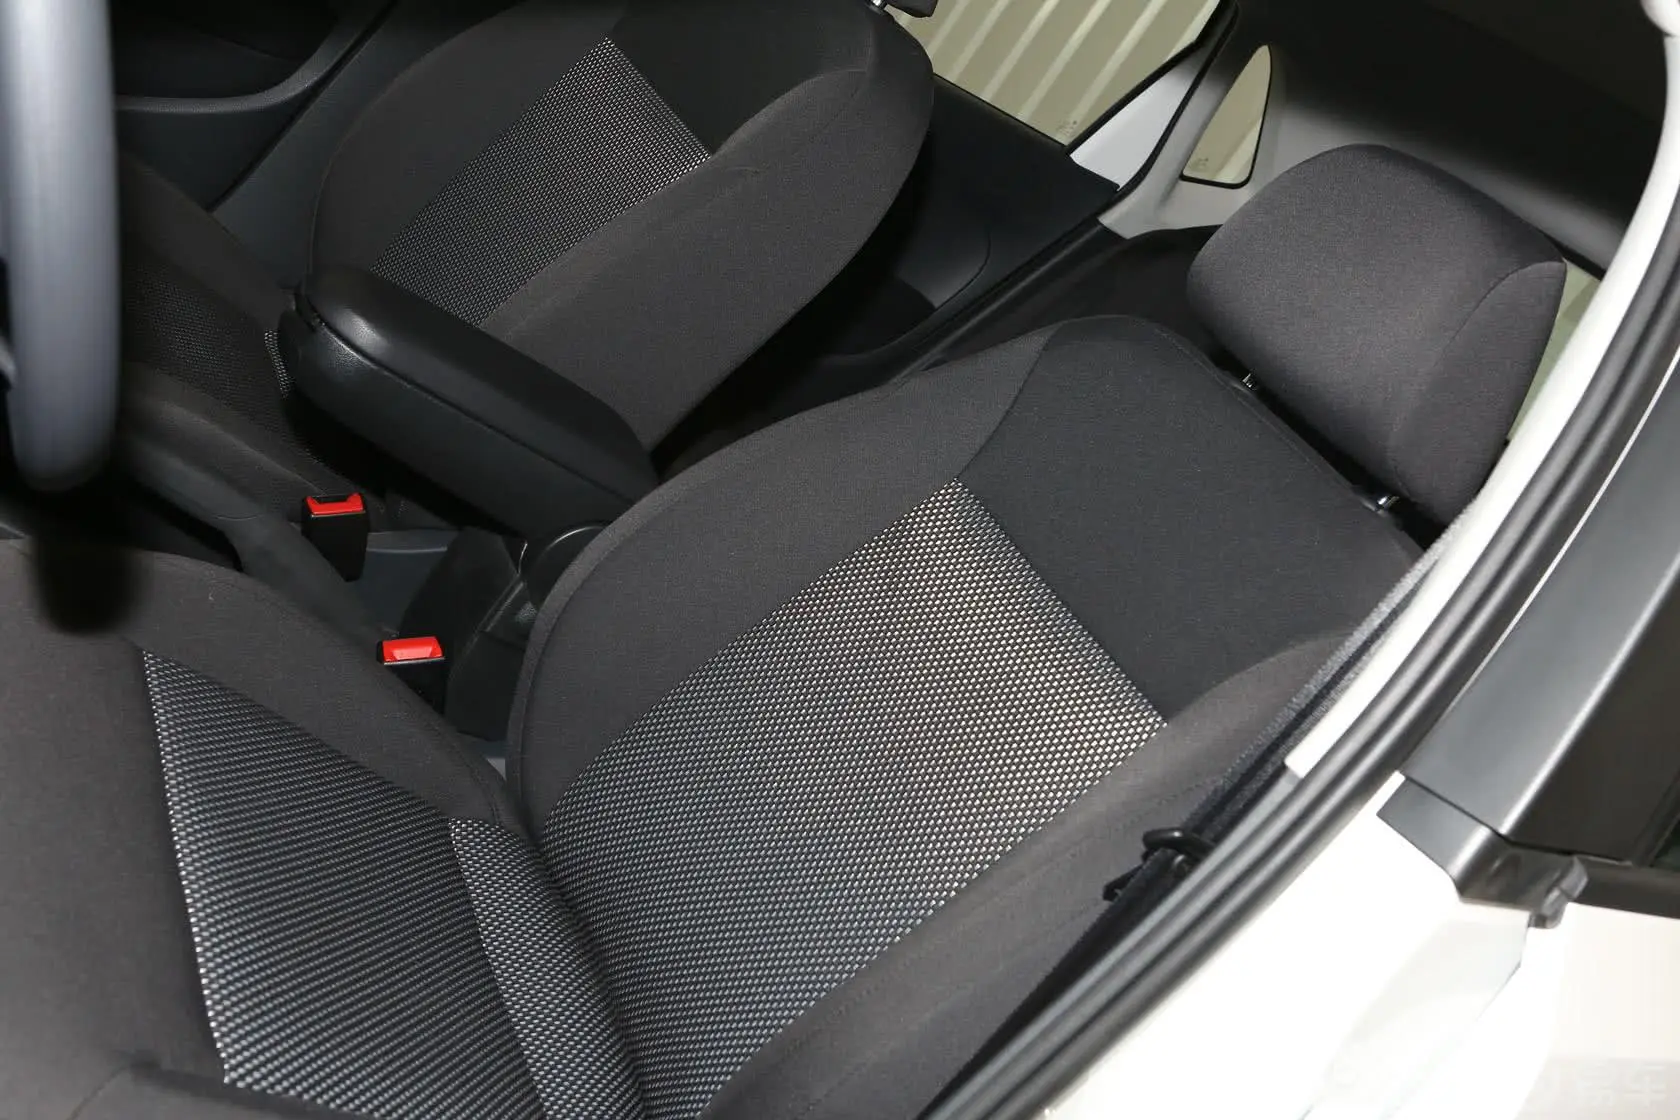 Polo1.6L 自动 舒适版驾驶员座椅